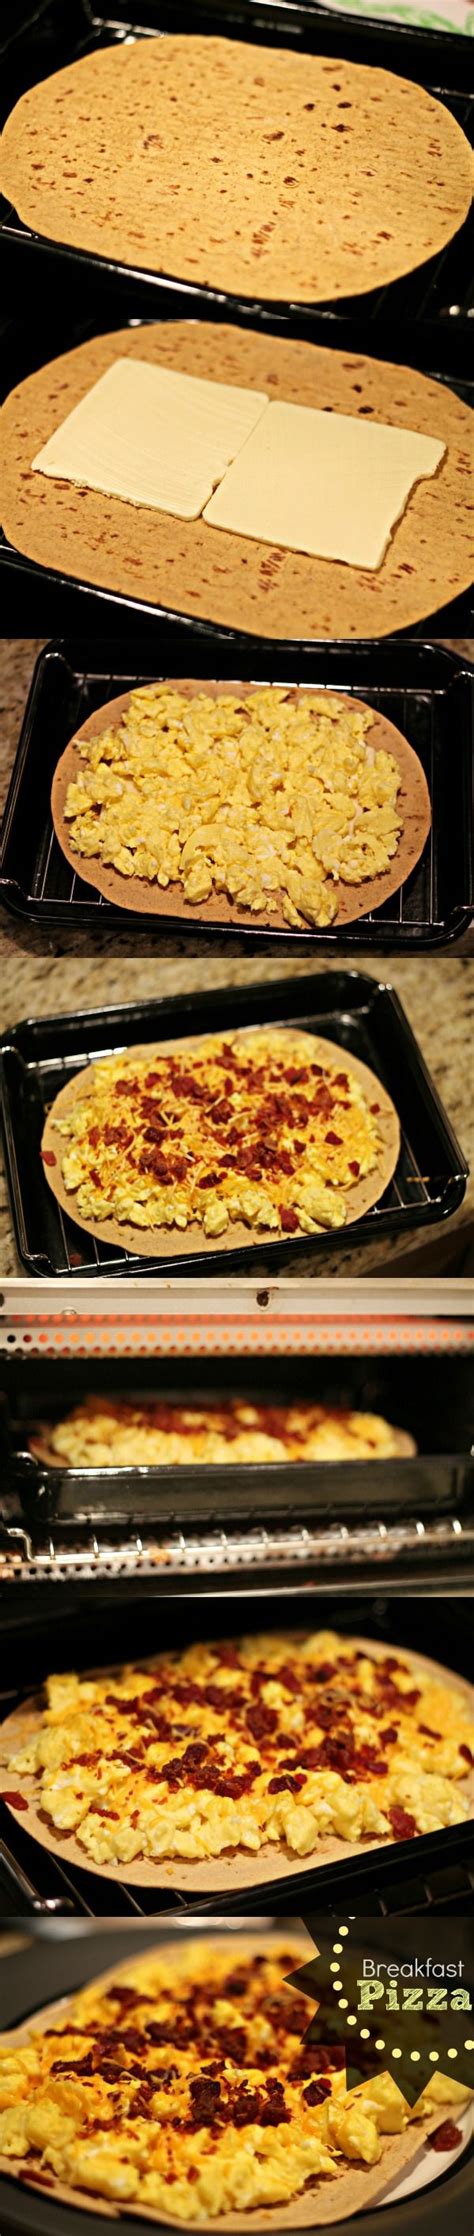 breakfast pizza recipe  flatout breadreview totally good